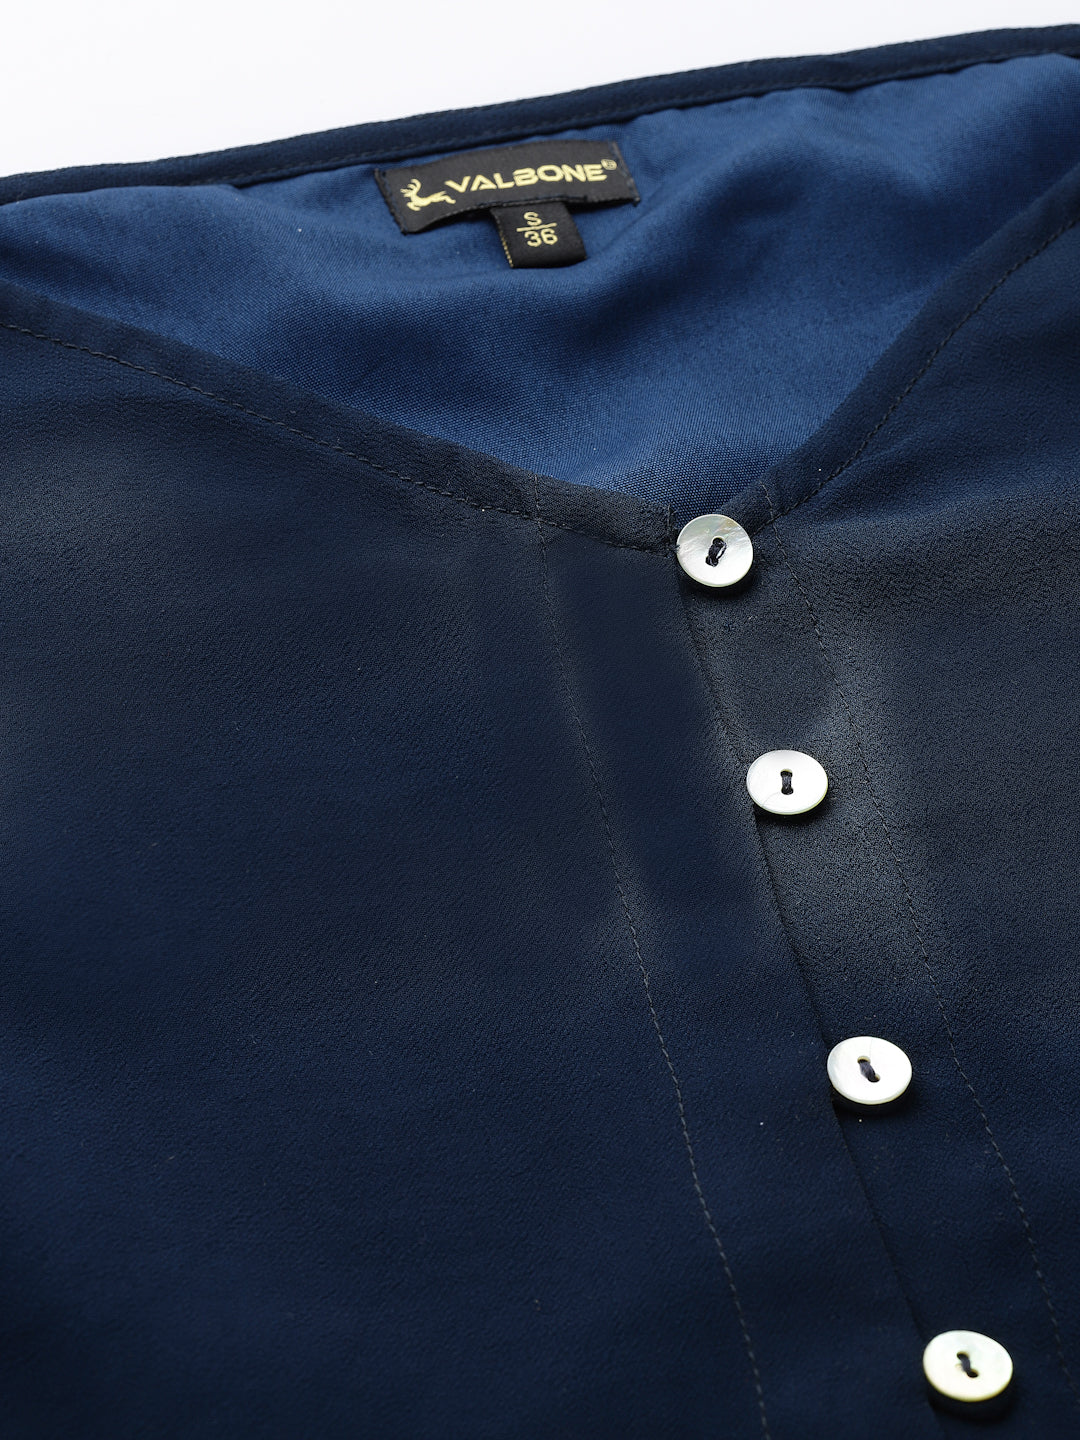 Valbone Women's Navy Blue Georgette Button Closure Top Full-Sleeves